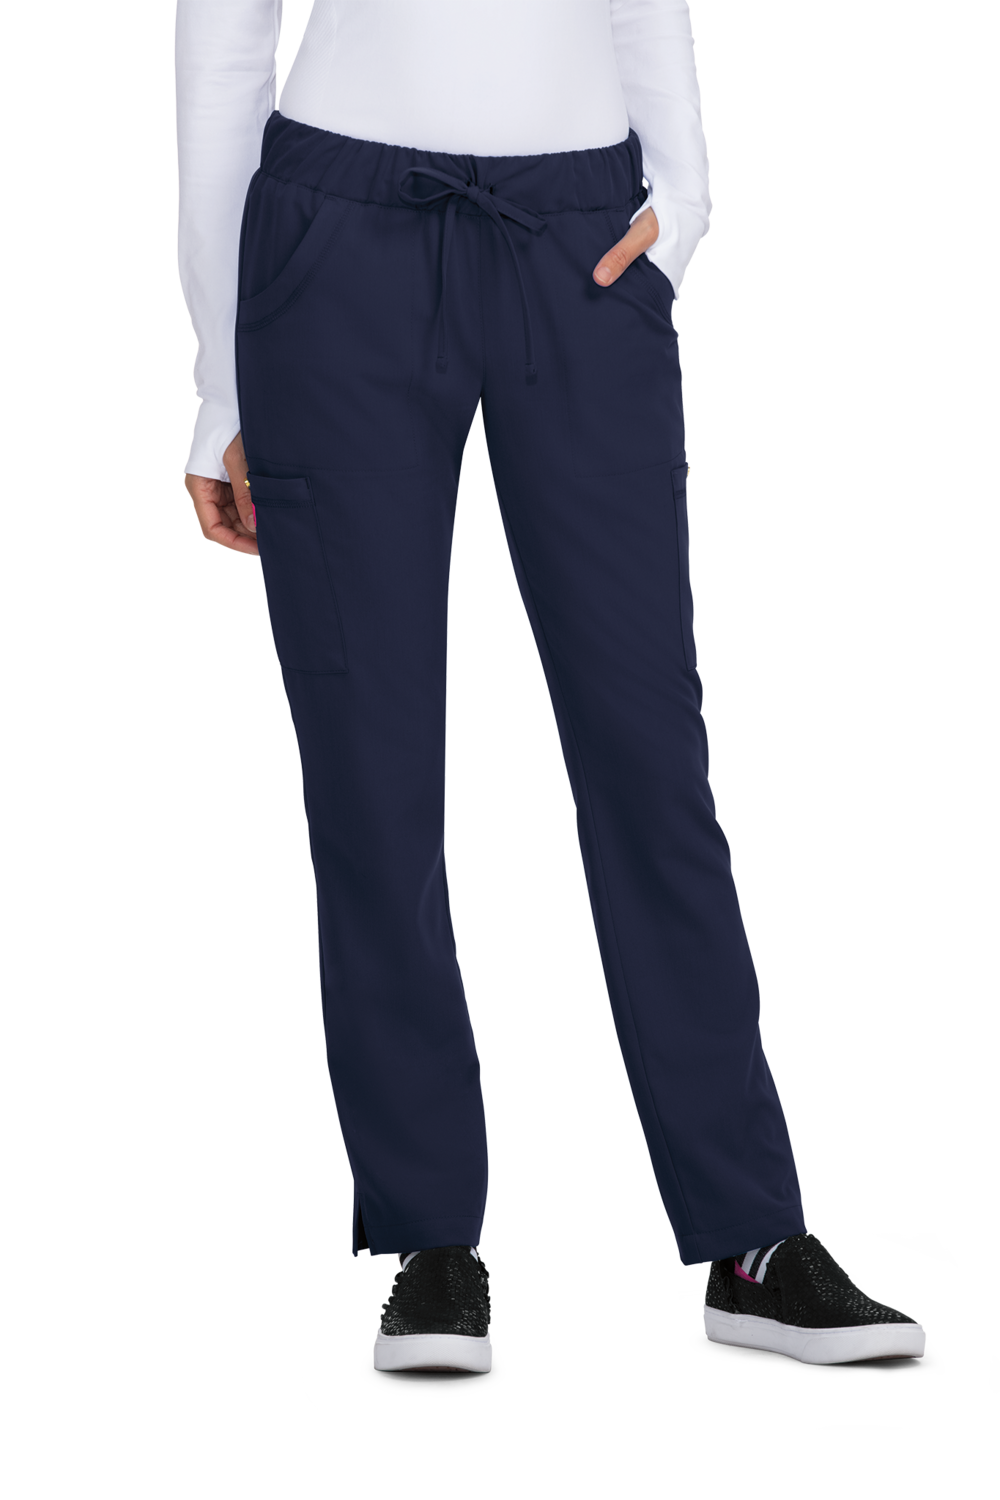 Pantalone KOI by Betsey Johnson BUTTERCUP Colore 012. Navy